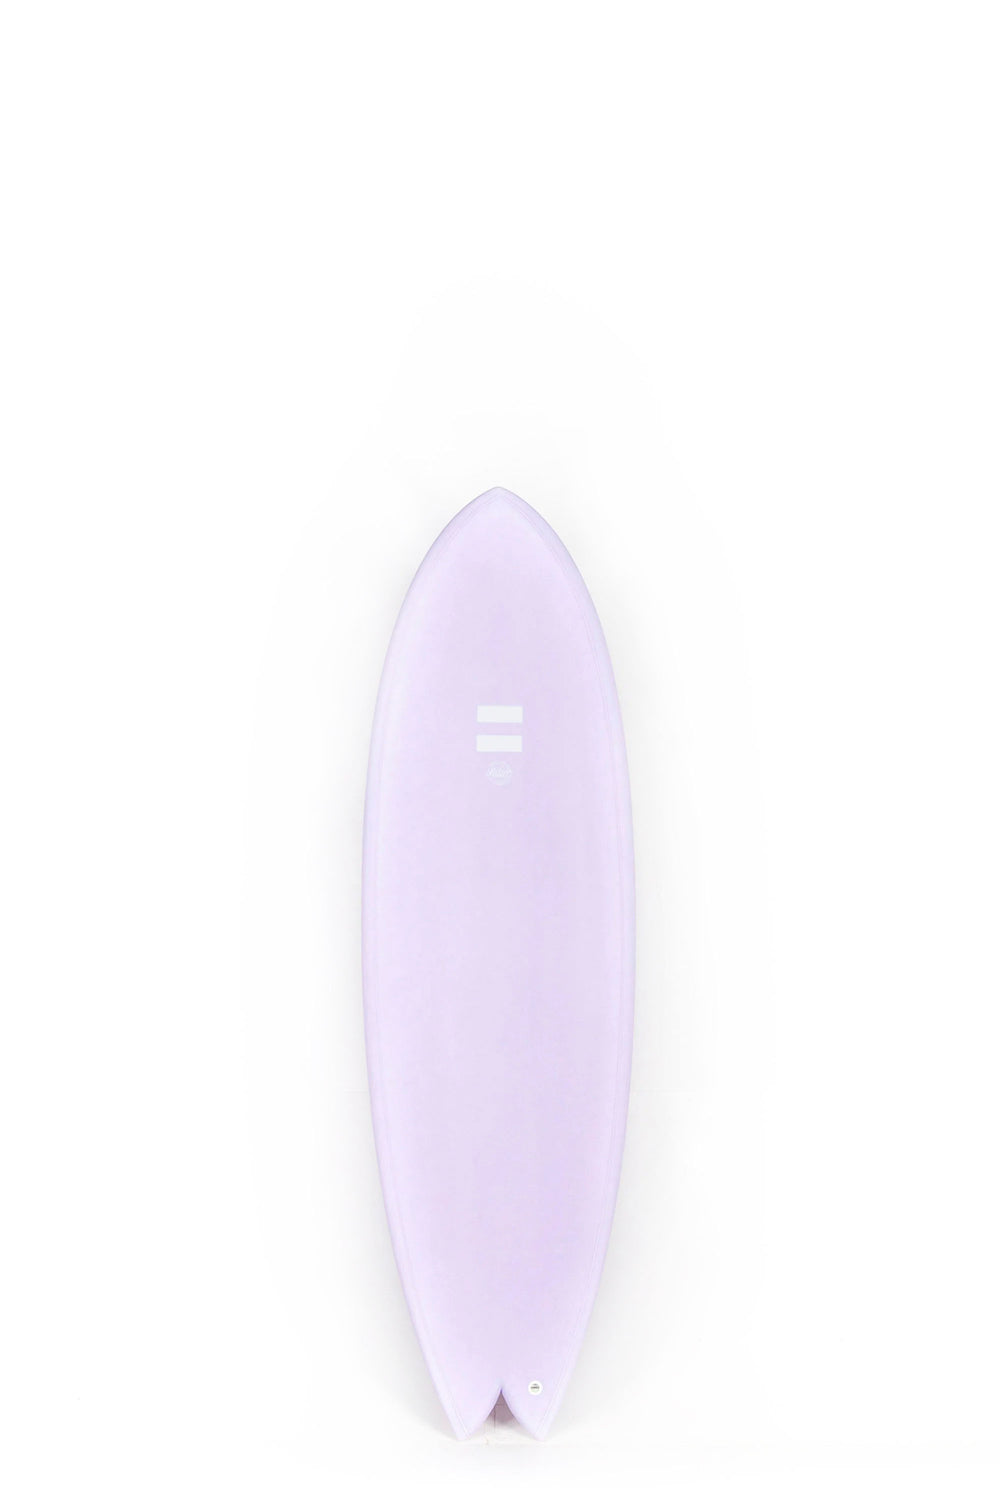 Indio Surfboards - COMBO Purple - 6'1